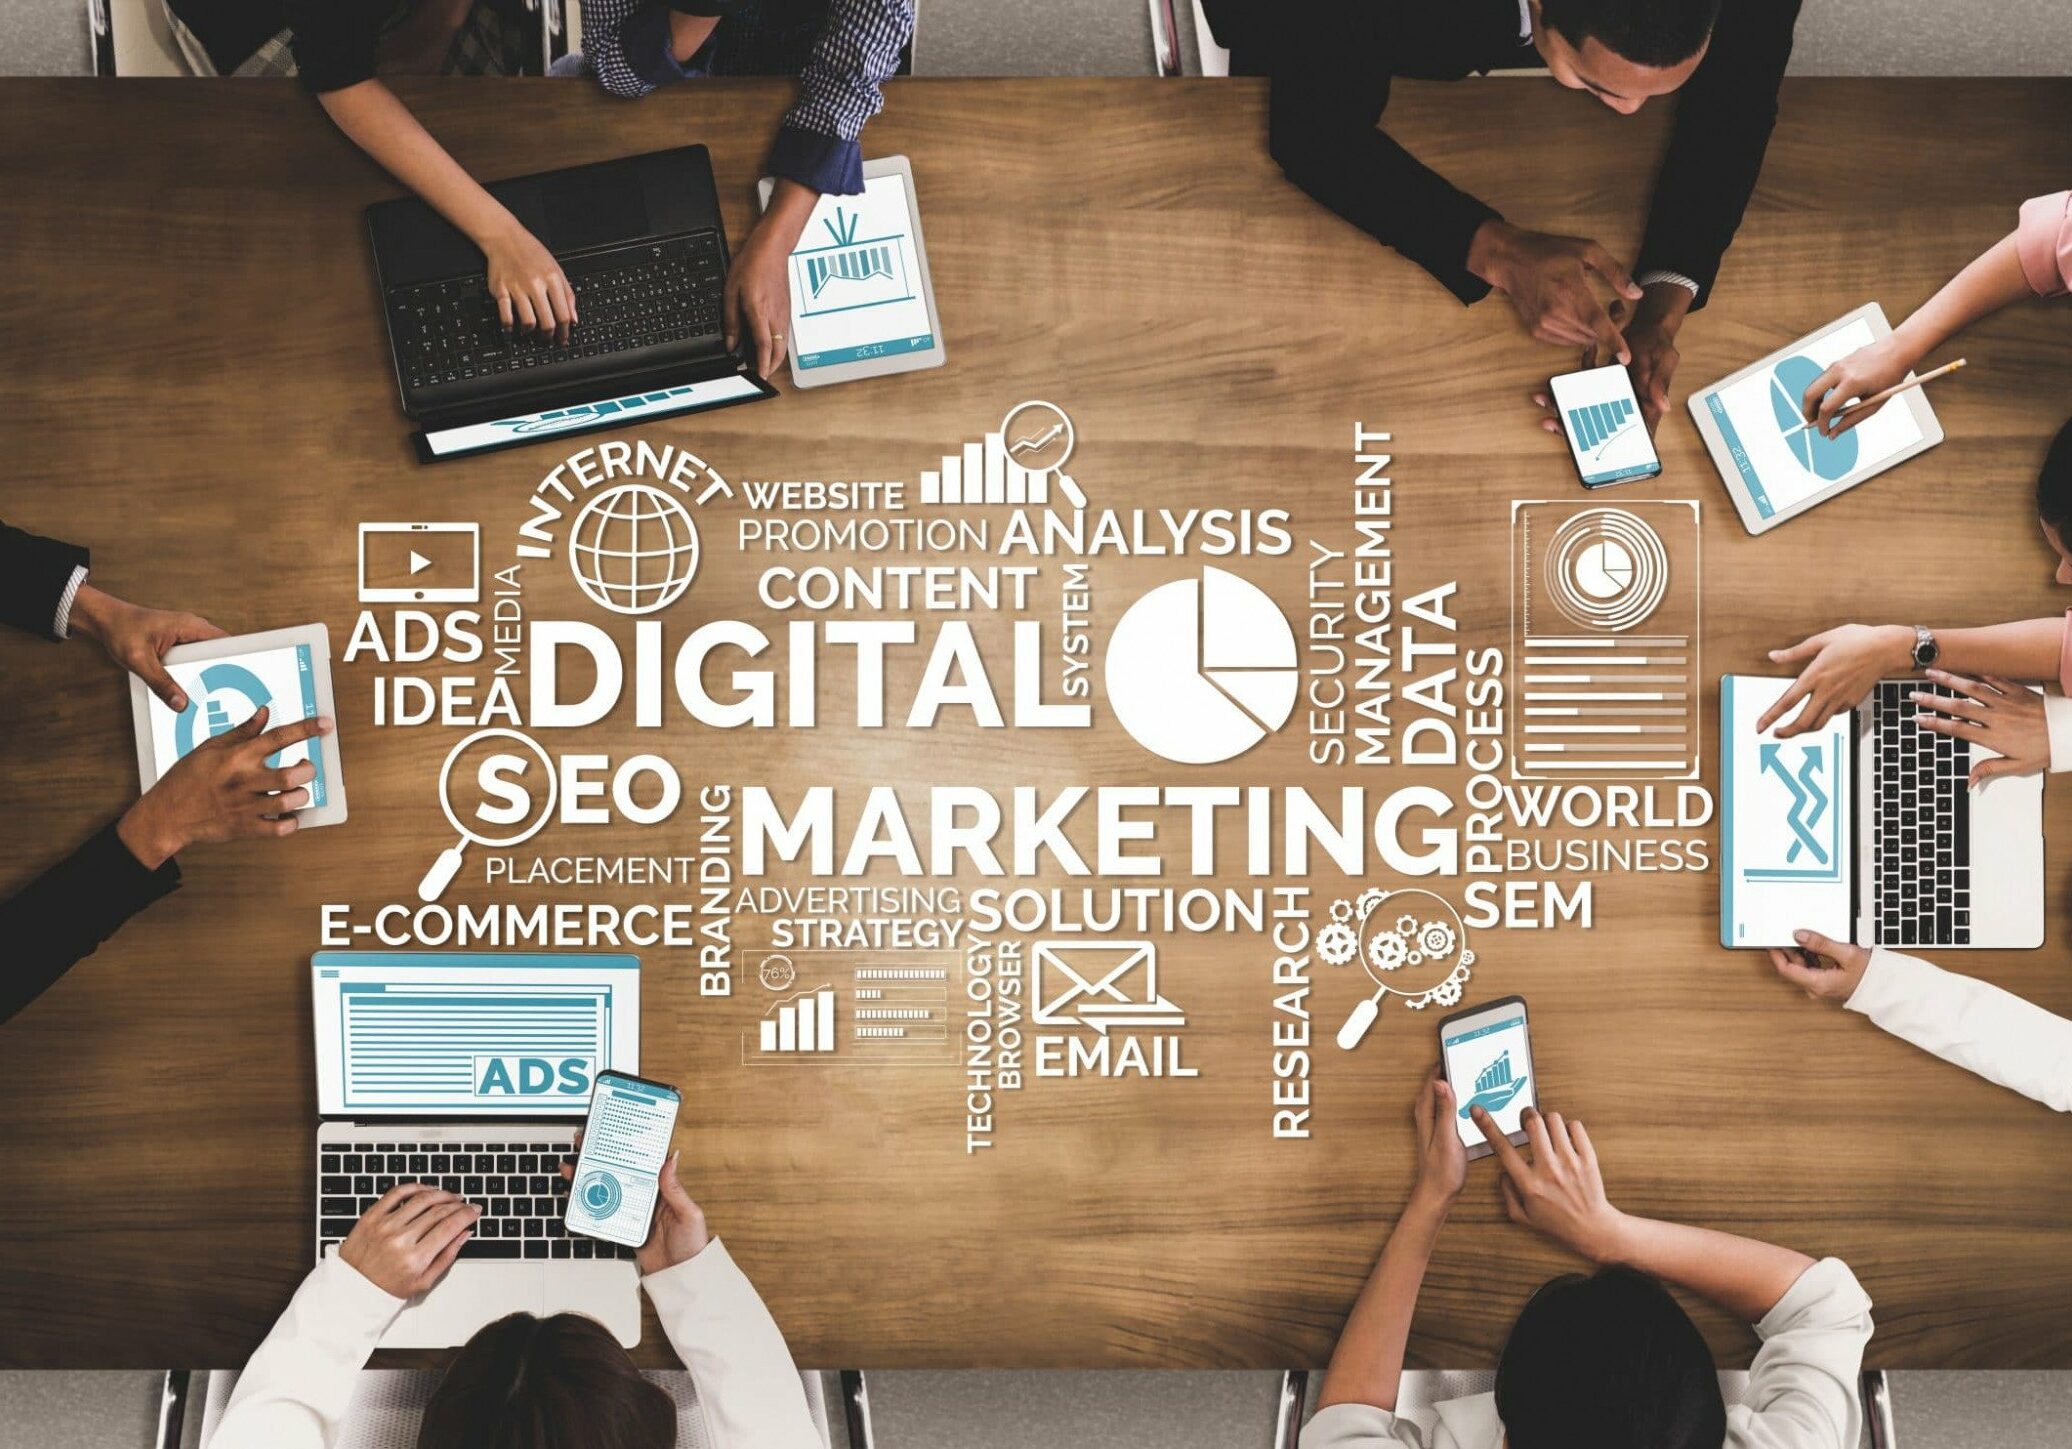 Digital Marketing Technology Solution for Online Business